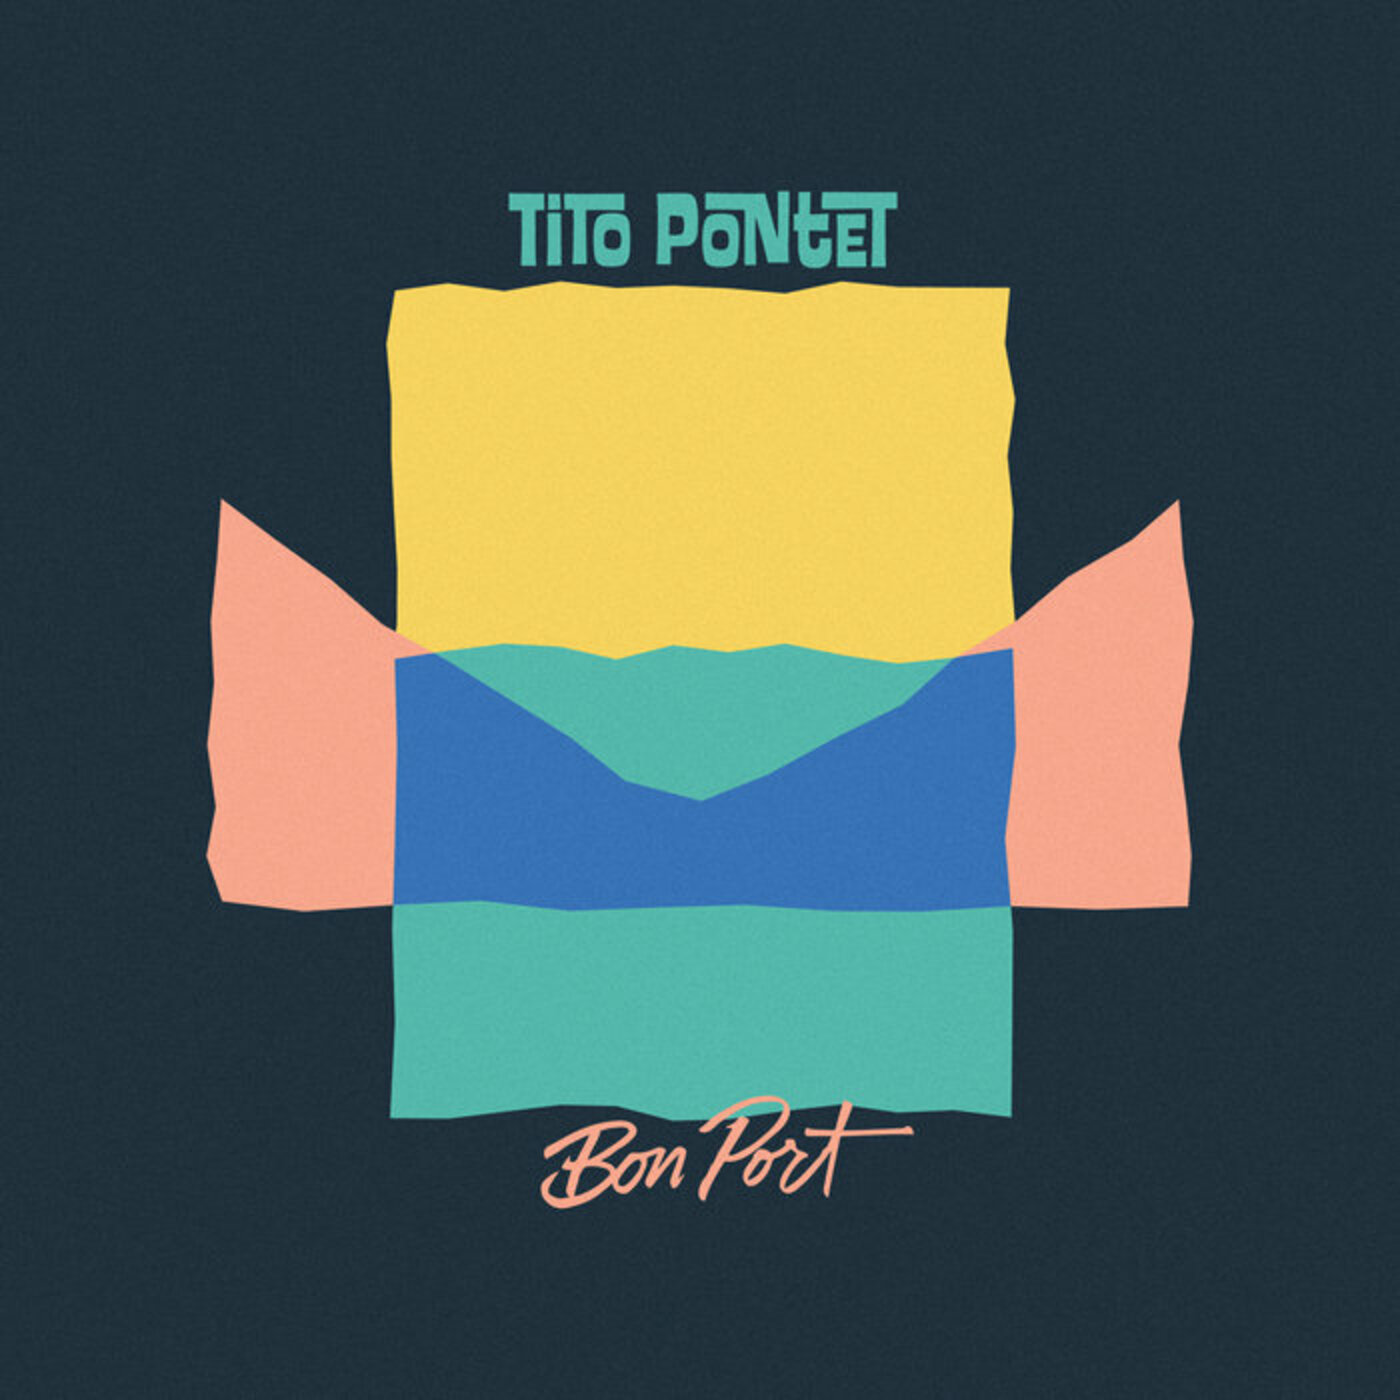 Tito Pontet - Bon port | musica en valencià